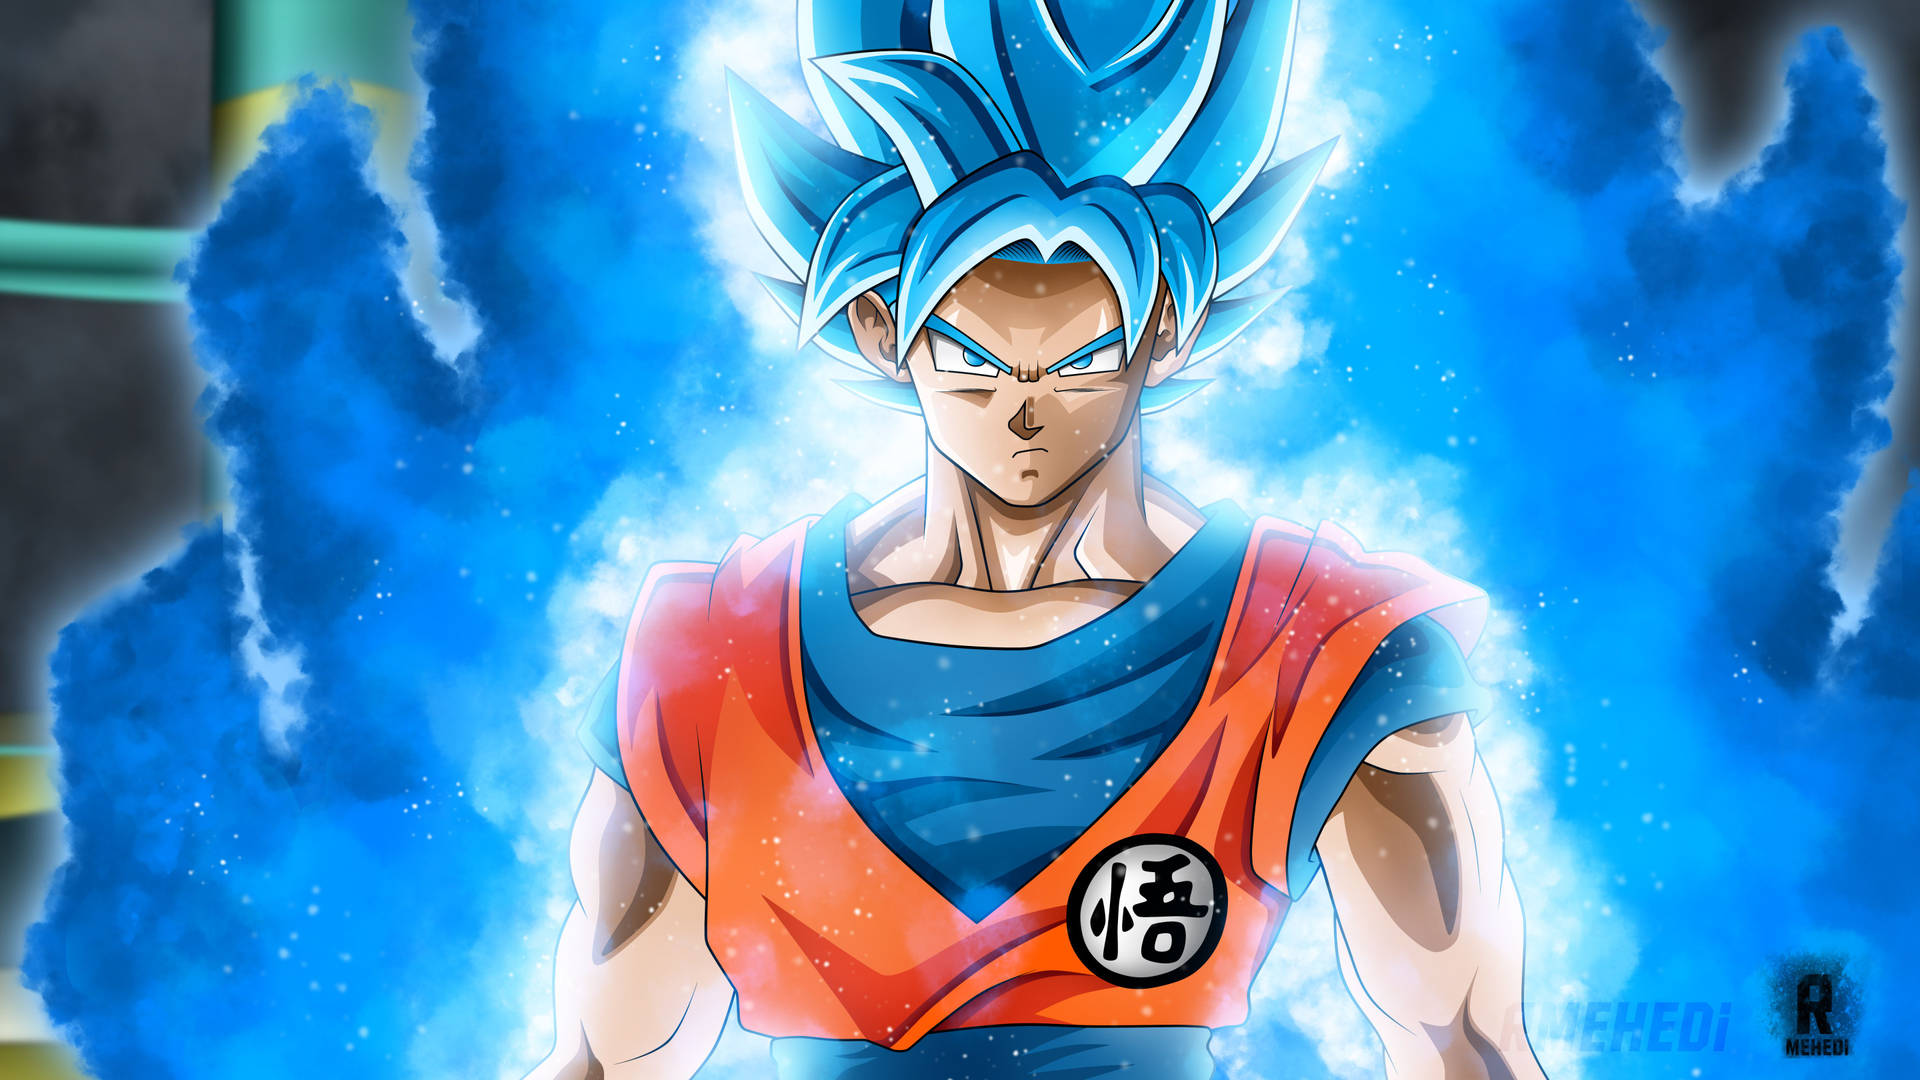 Goku 5760X3240 Wallpaper and Background Image